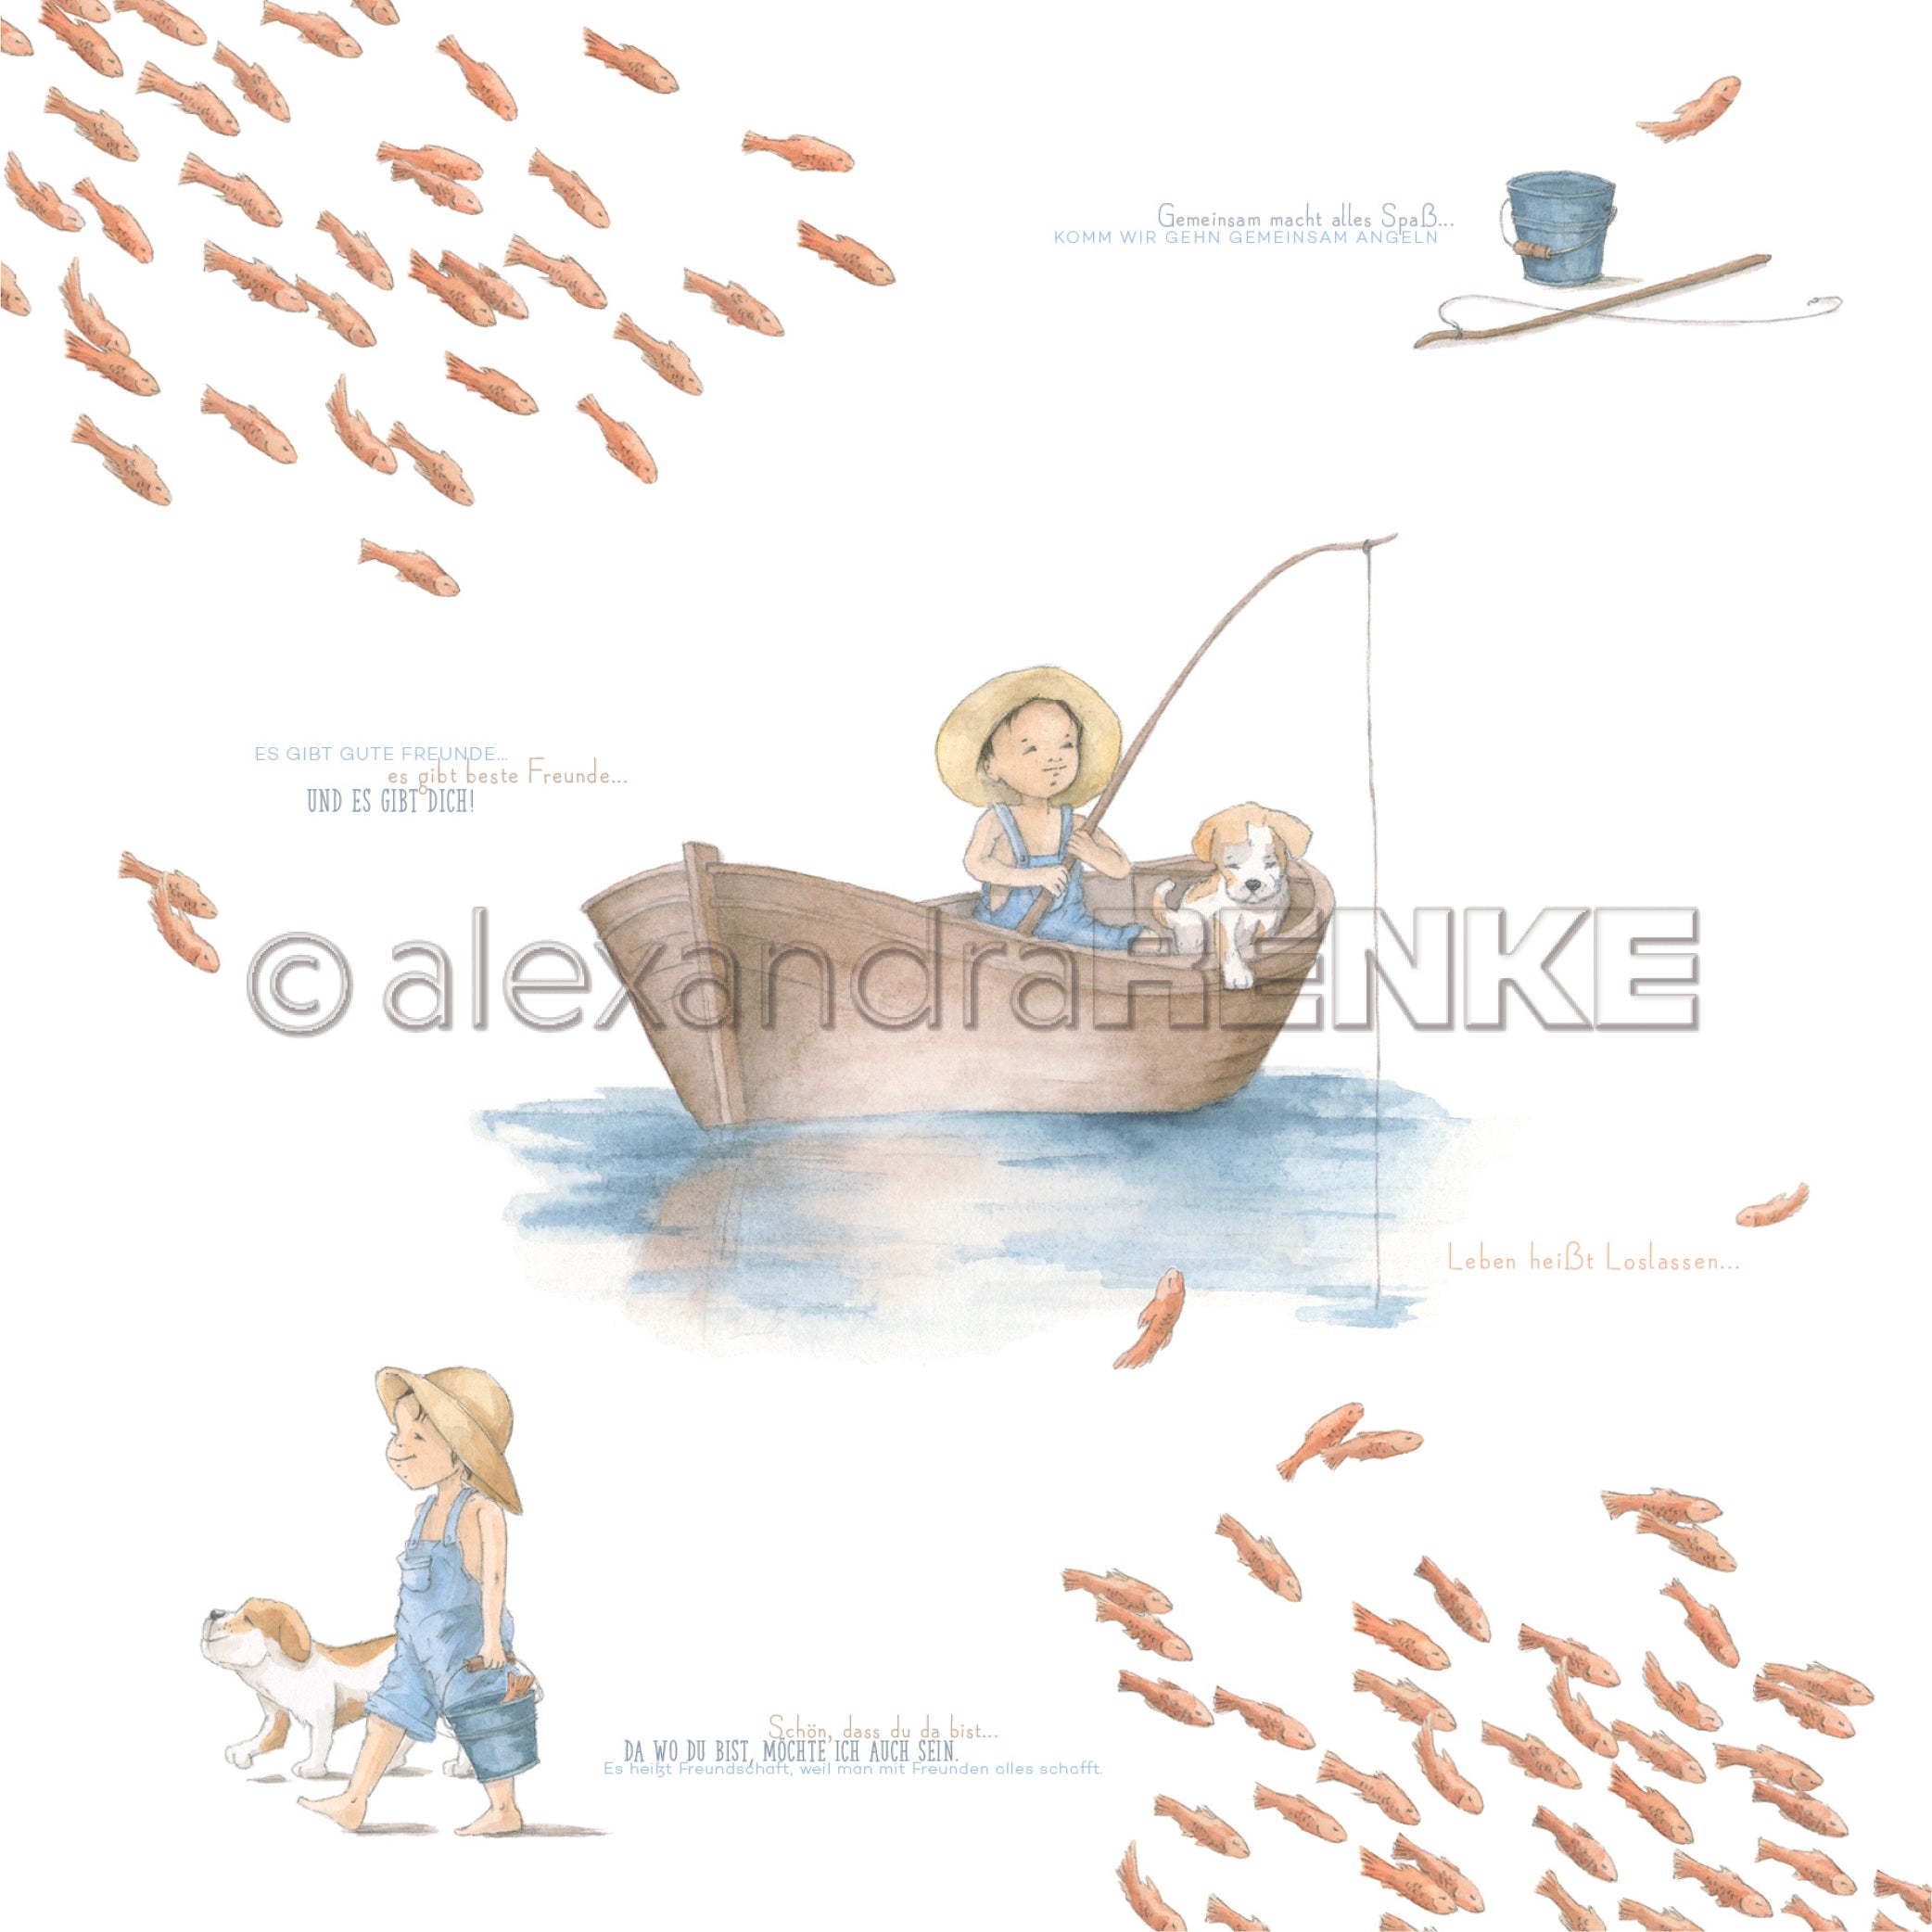 Alexandra Renke - Little Fisherman  - Paper   12x12"